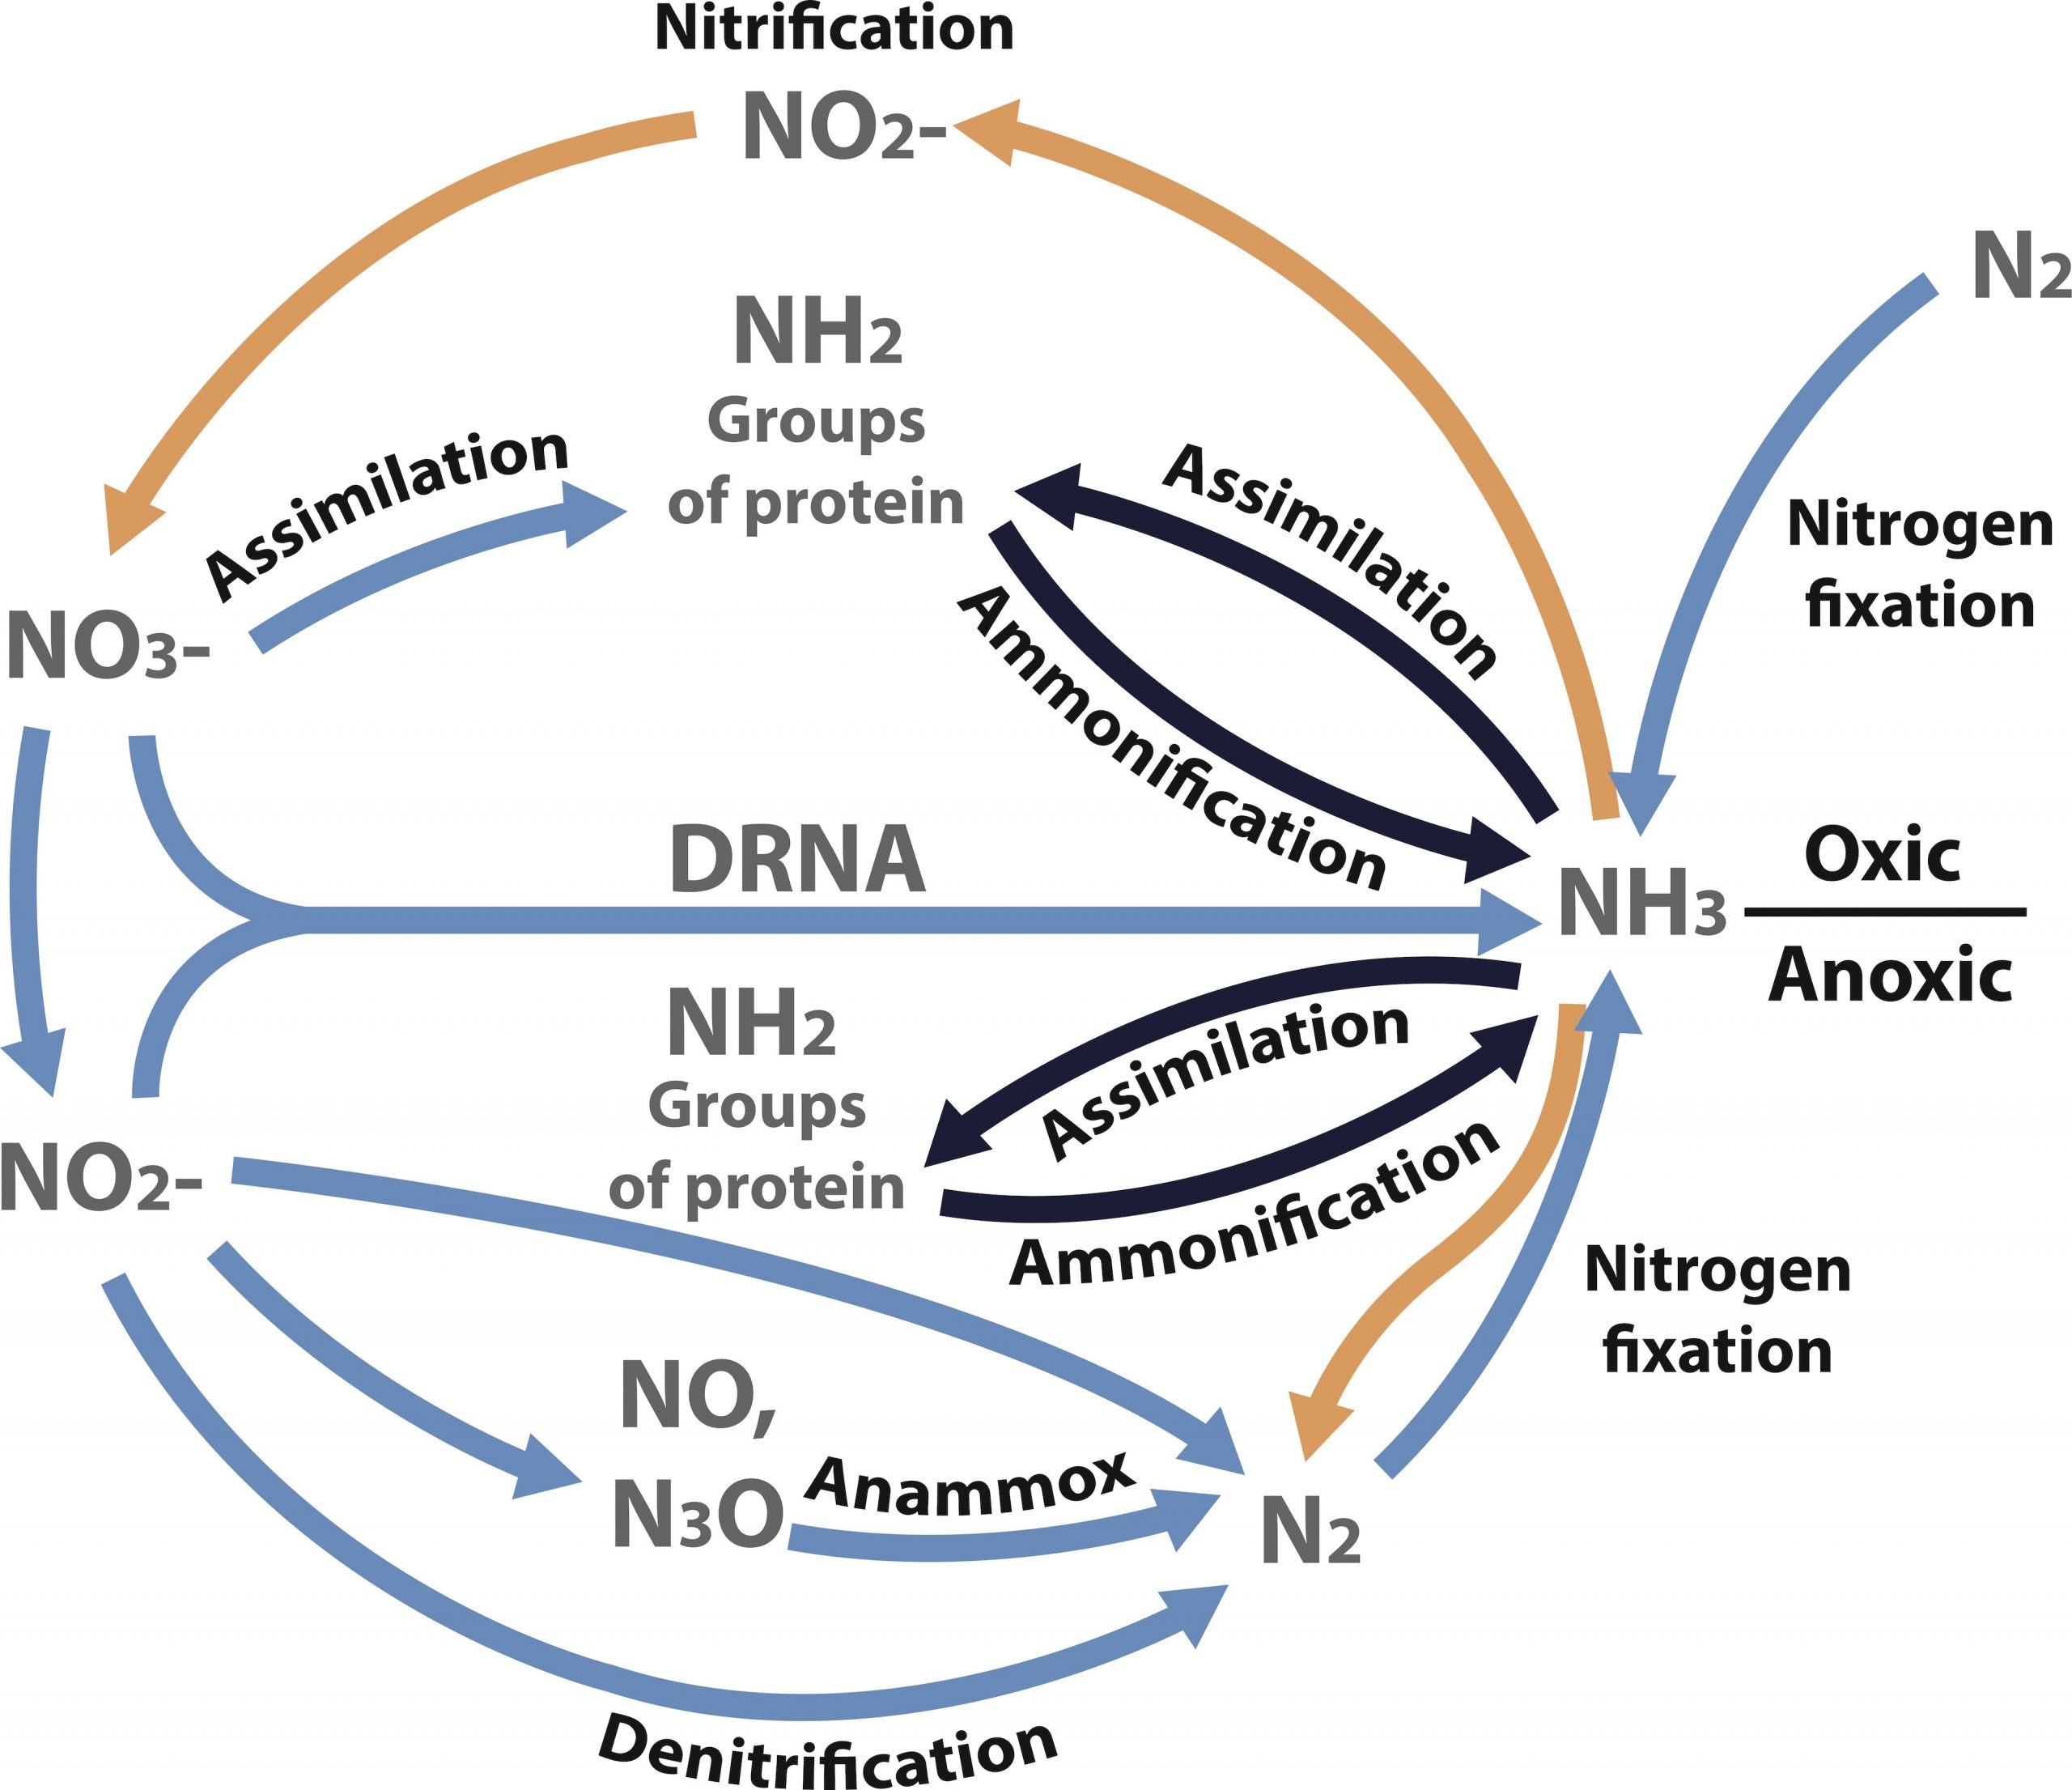 Steps Of Nitrogen Cycle